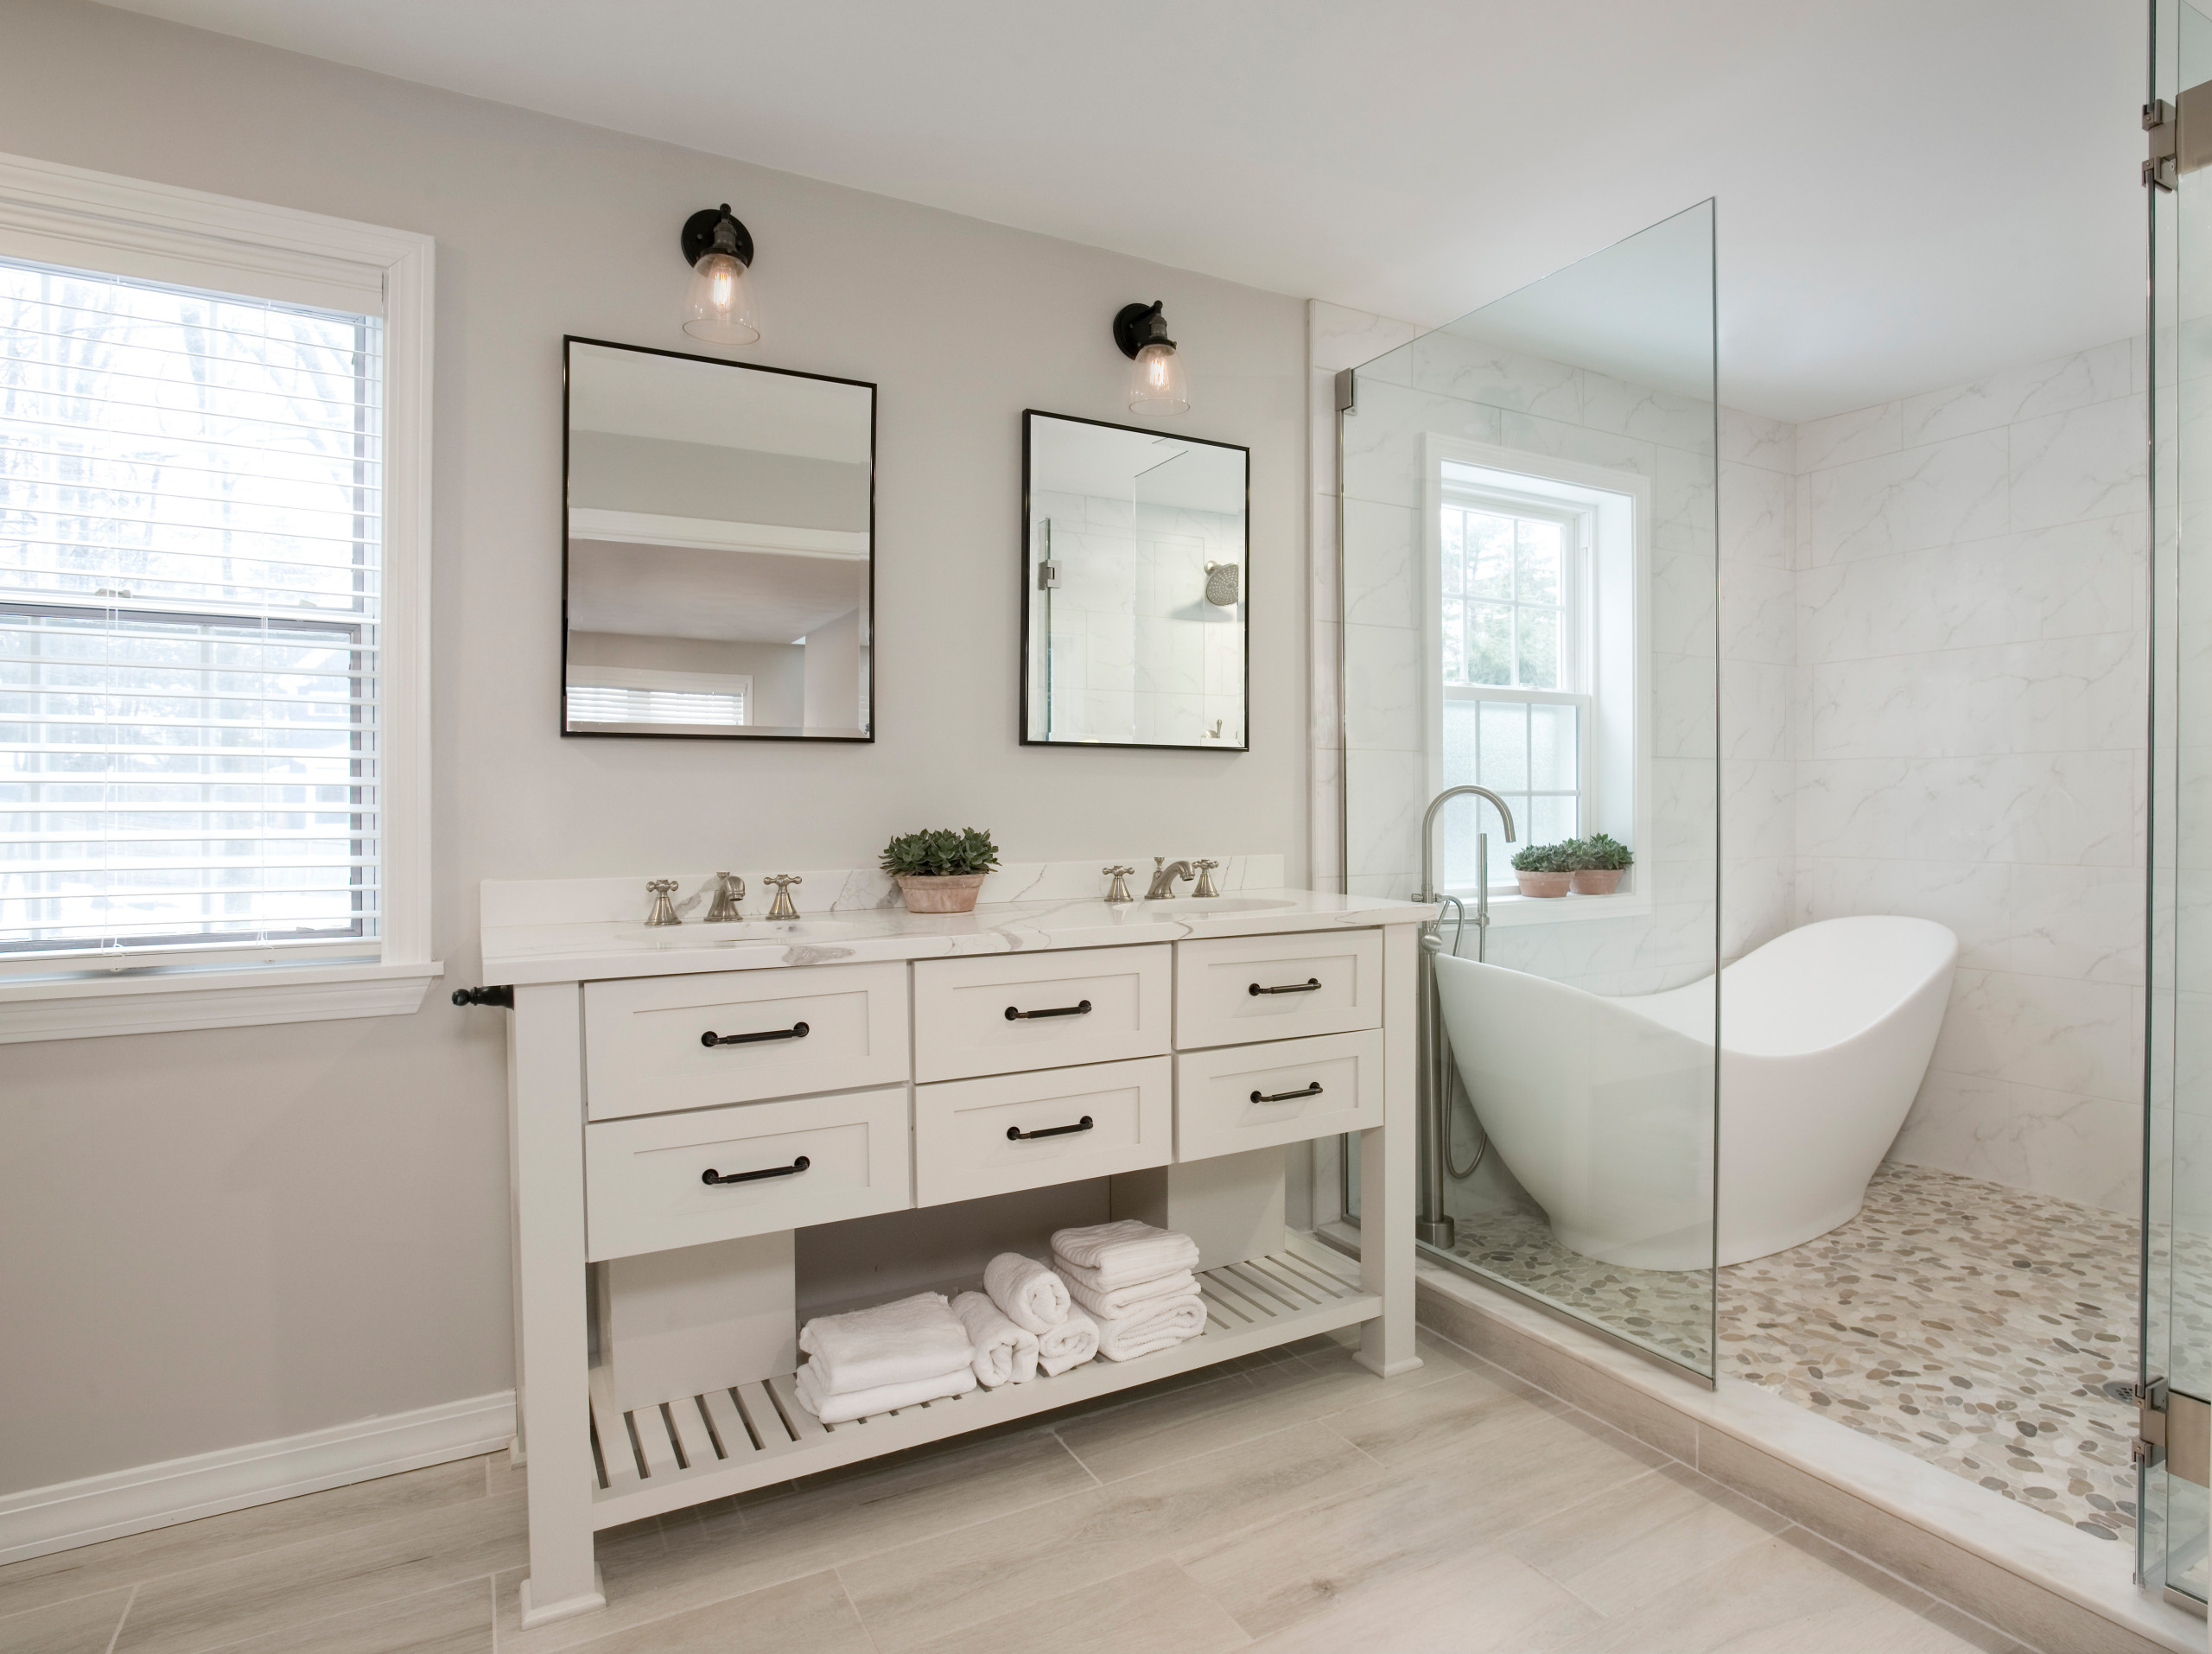 75 Beautiful Wood Look Tile Floor Master Bathroom Pictures Ideas July 2021 Houzz